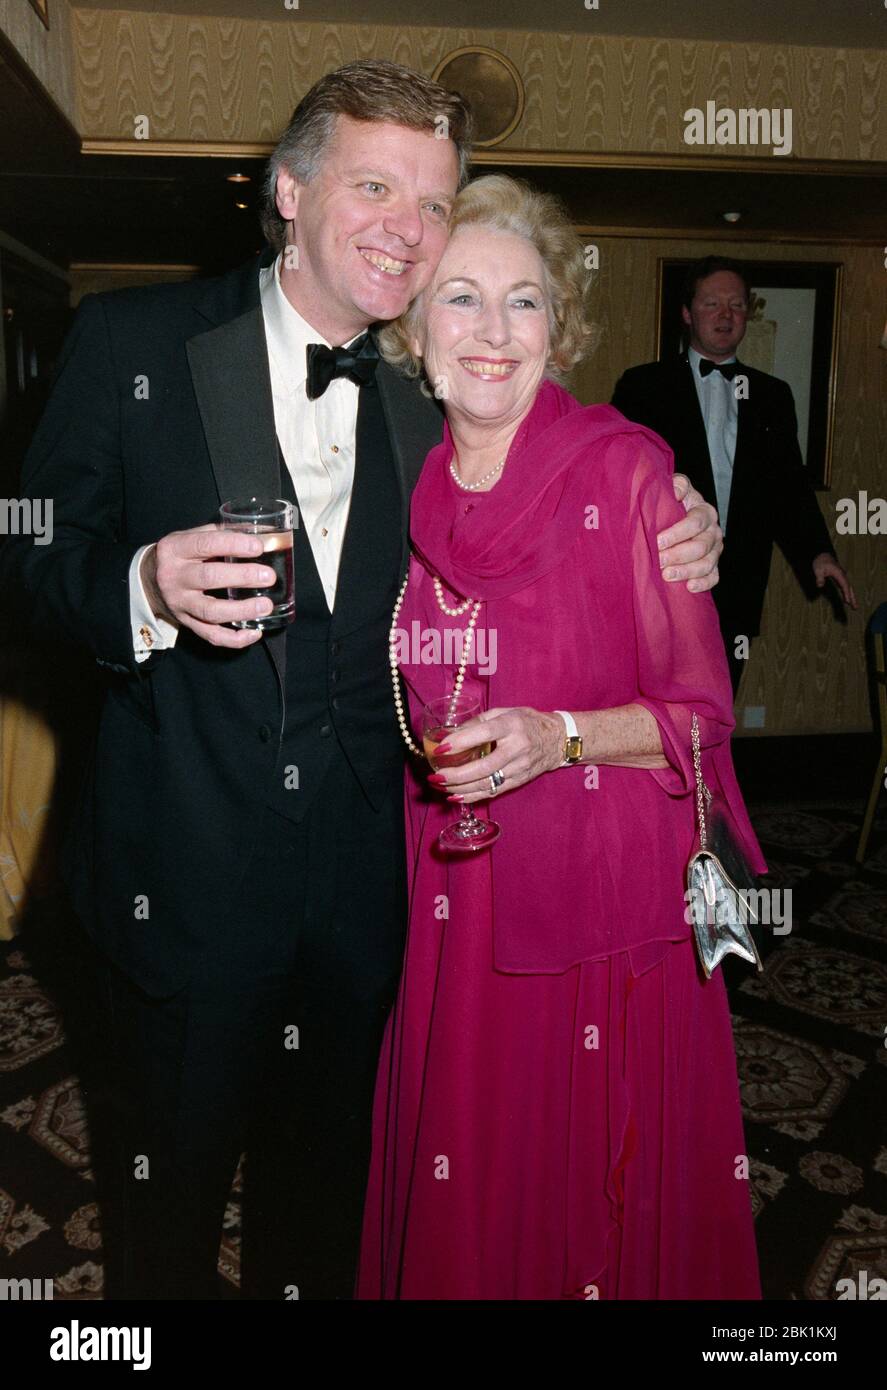 LONDON, UK. December 4, 1990: Singer Vera Lynn & producer Michael Grade at the Diamond Ball at the Royal Lancaster Hotel, London. File photo © Paul Smith/Featureflash Stock Photo